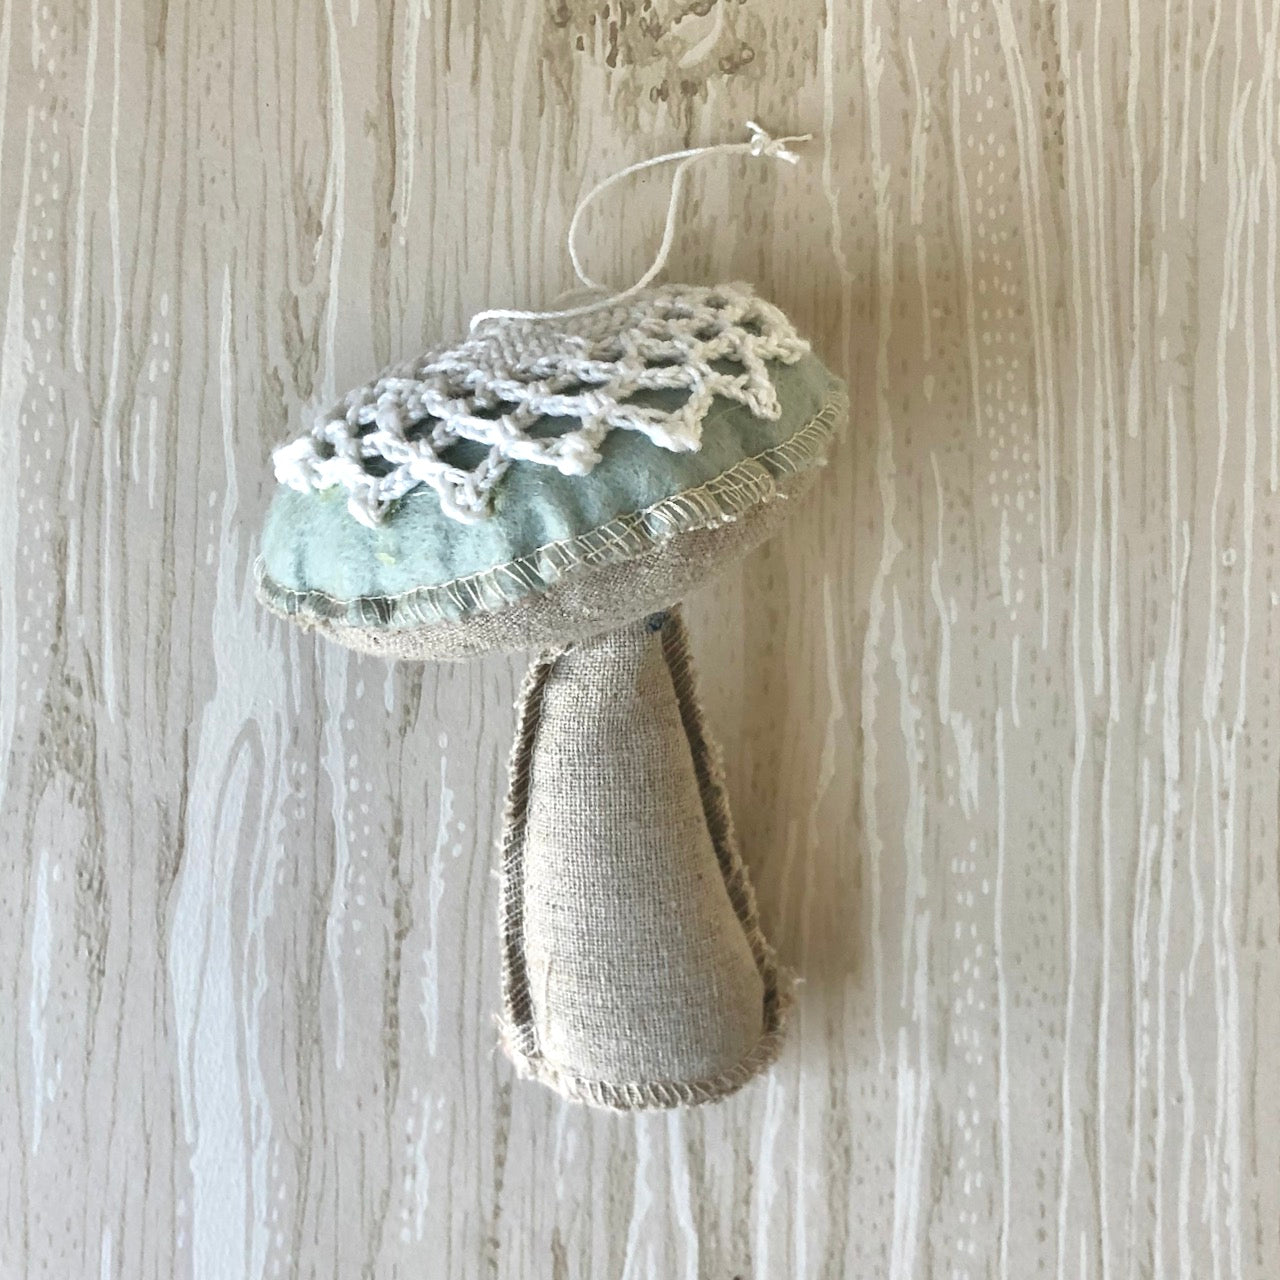 Crochet Lace Mushroom Ornaments